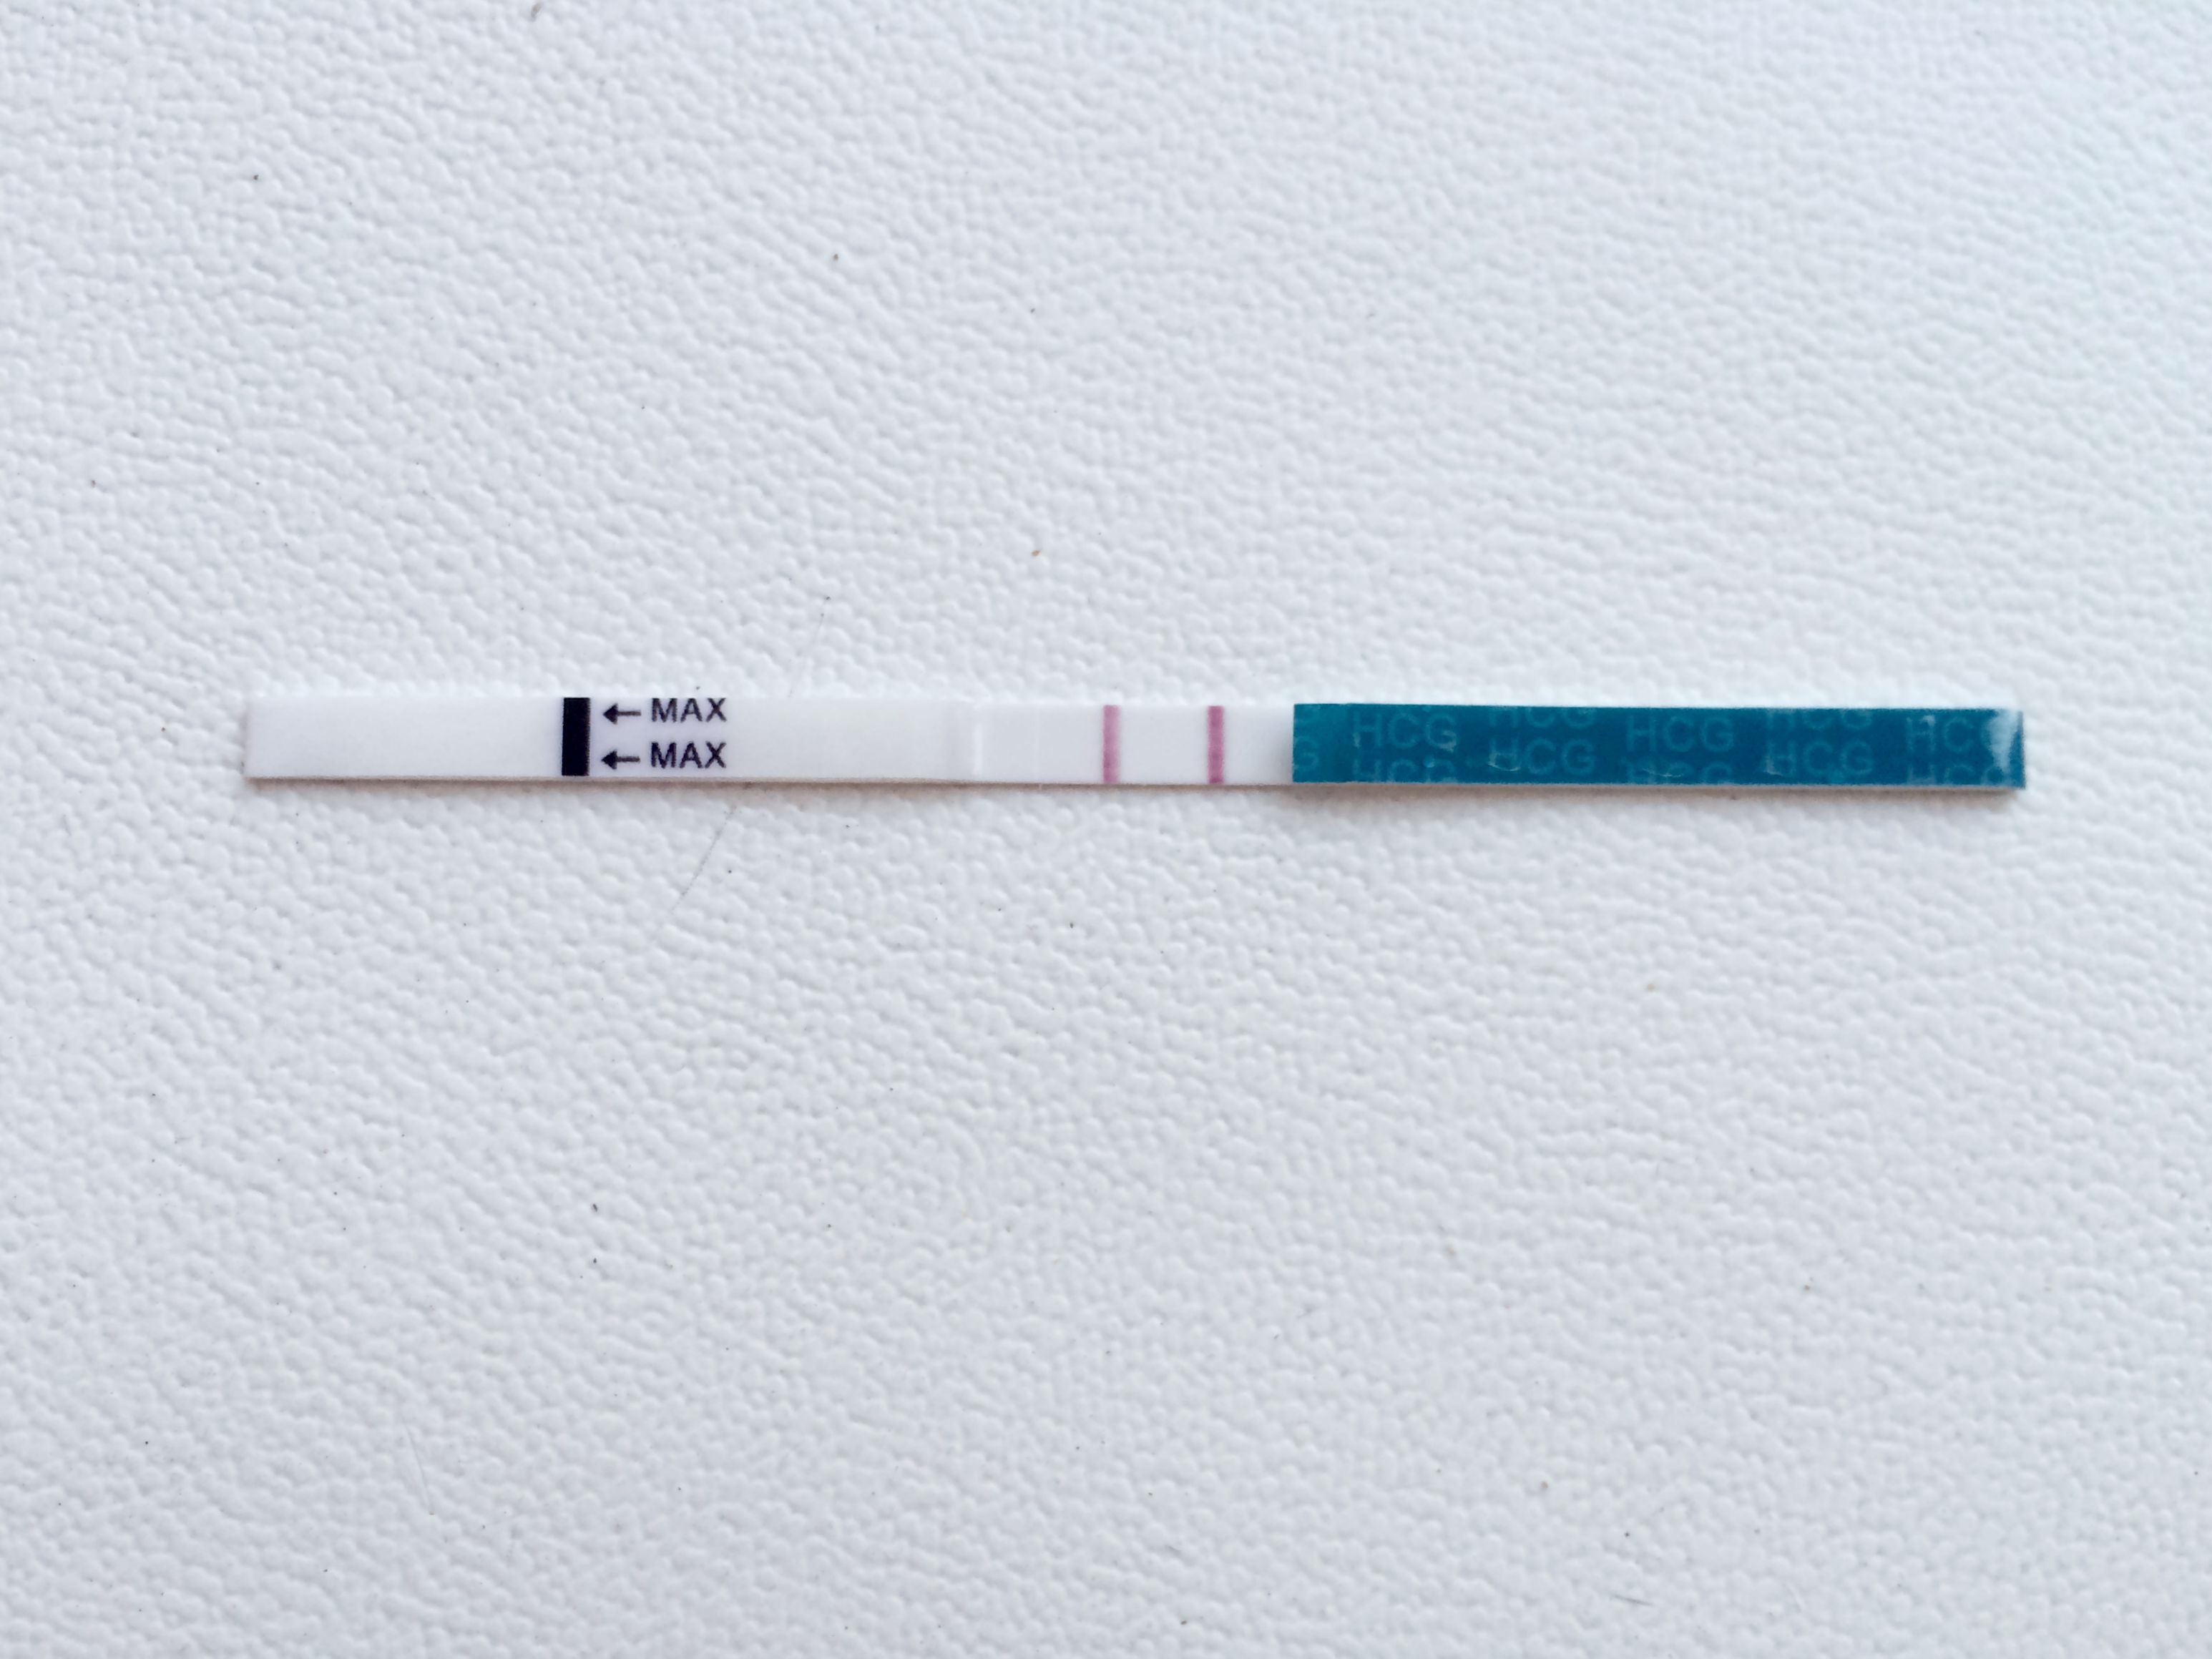 Тест на беременность на столе. Тест на беременность 2 poloska. Тест на беременность с 2 тест полосками. Тест HCG 2 полоски. Тест полоски на беременность фото 2 полоски.